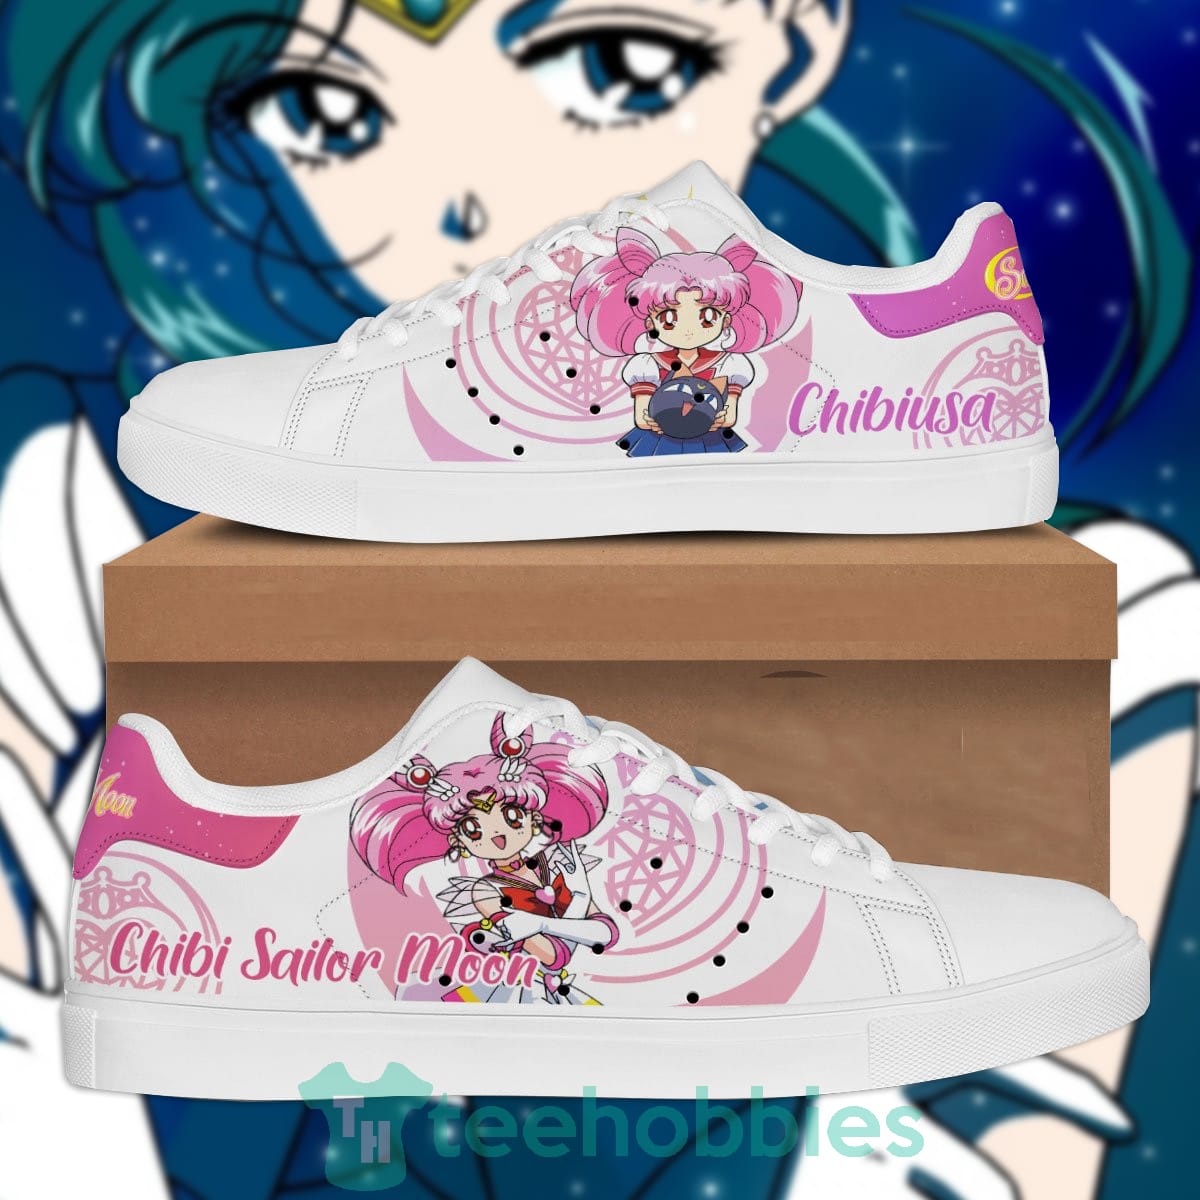 Chibiusa Tsukino Chibi Sailor Moon Anime Lover Skate Shoes For Fans